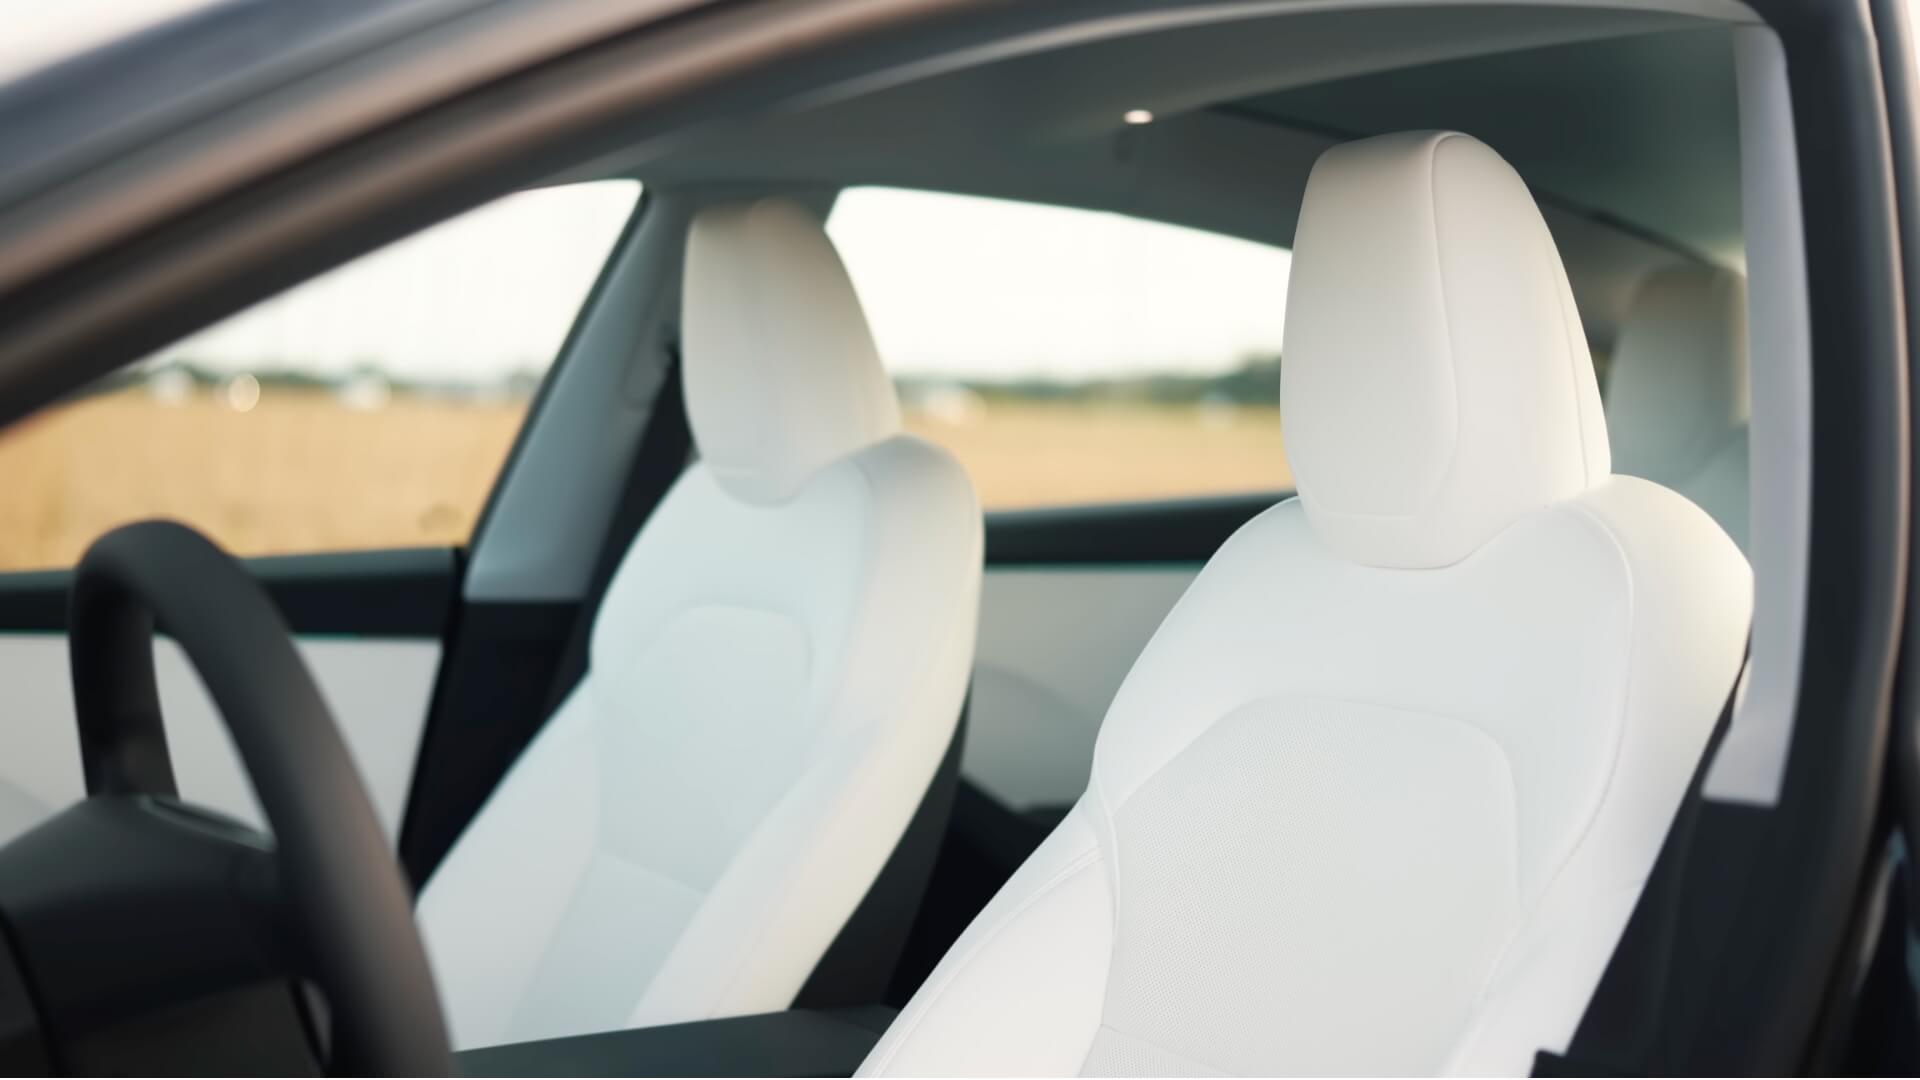 Tesla Model 3 Ventilated Seats